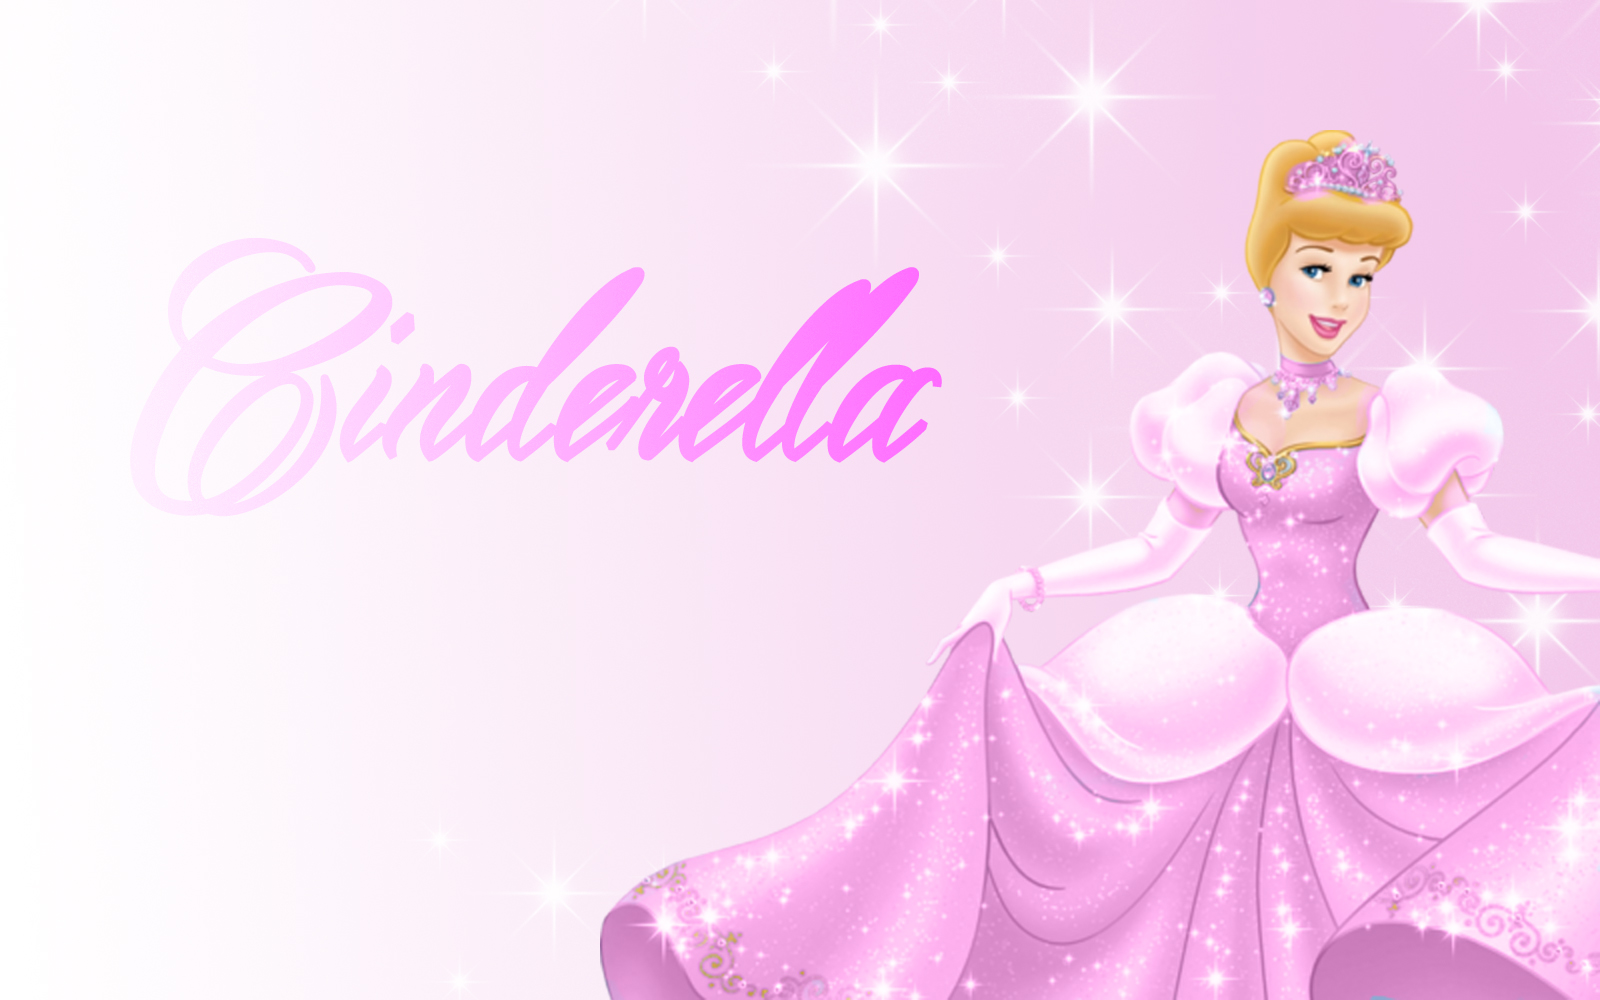 Cinderella in pink - Disney Princess Wallpaper (38405645) - Fanpop